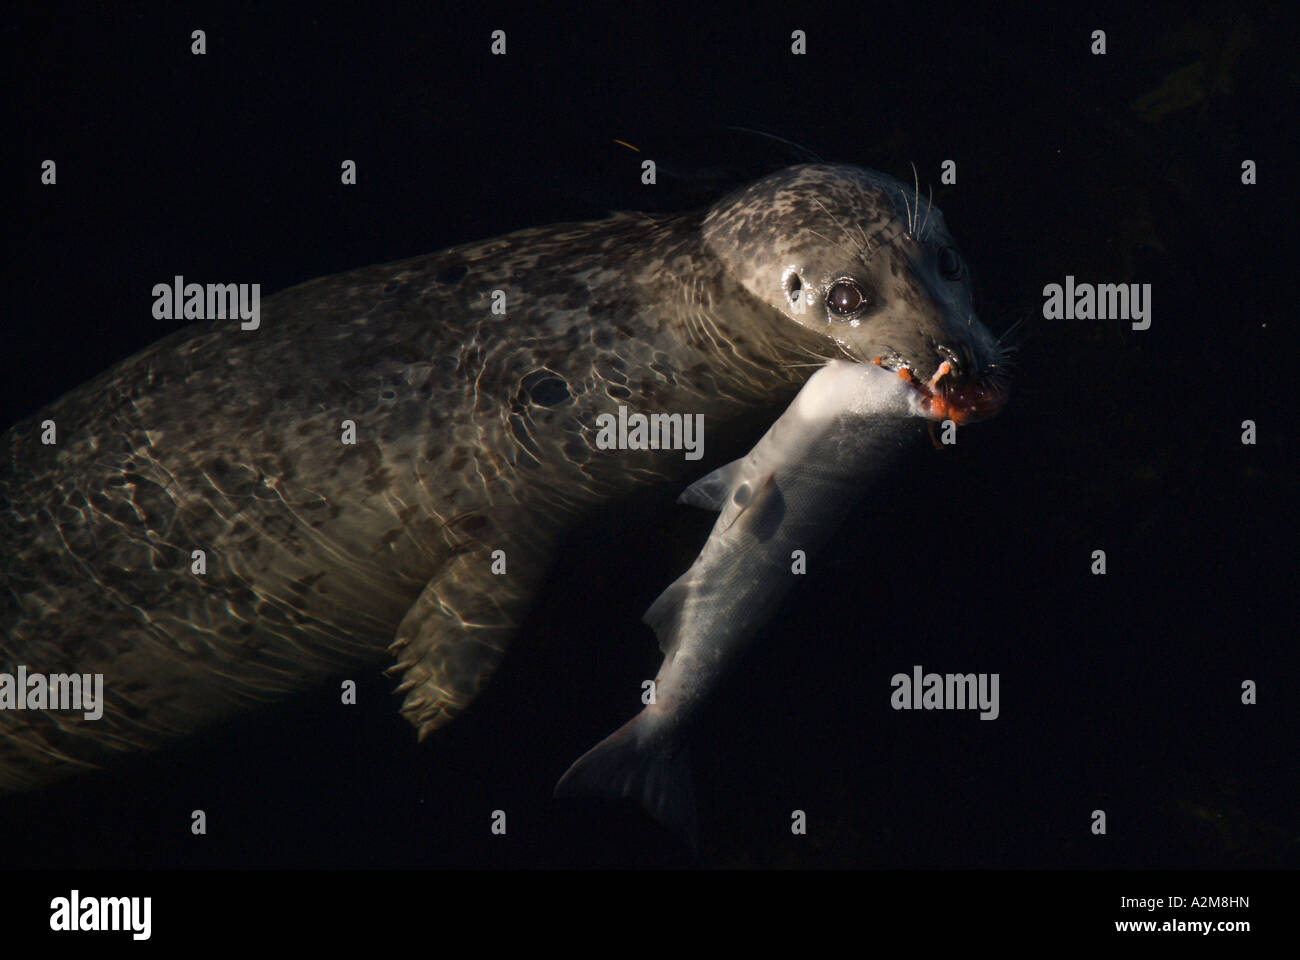 A harbou seal devours a salmon. Stock Photo